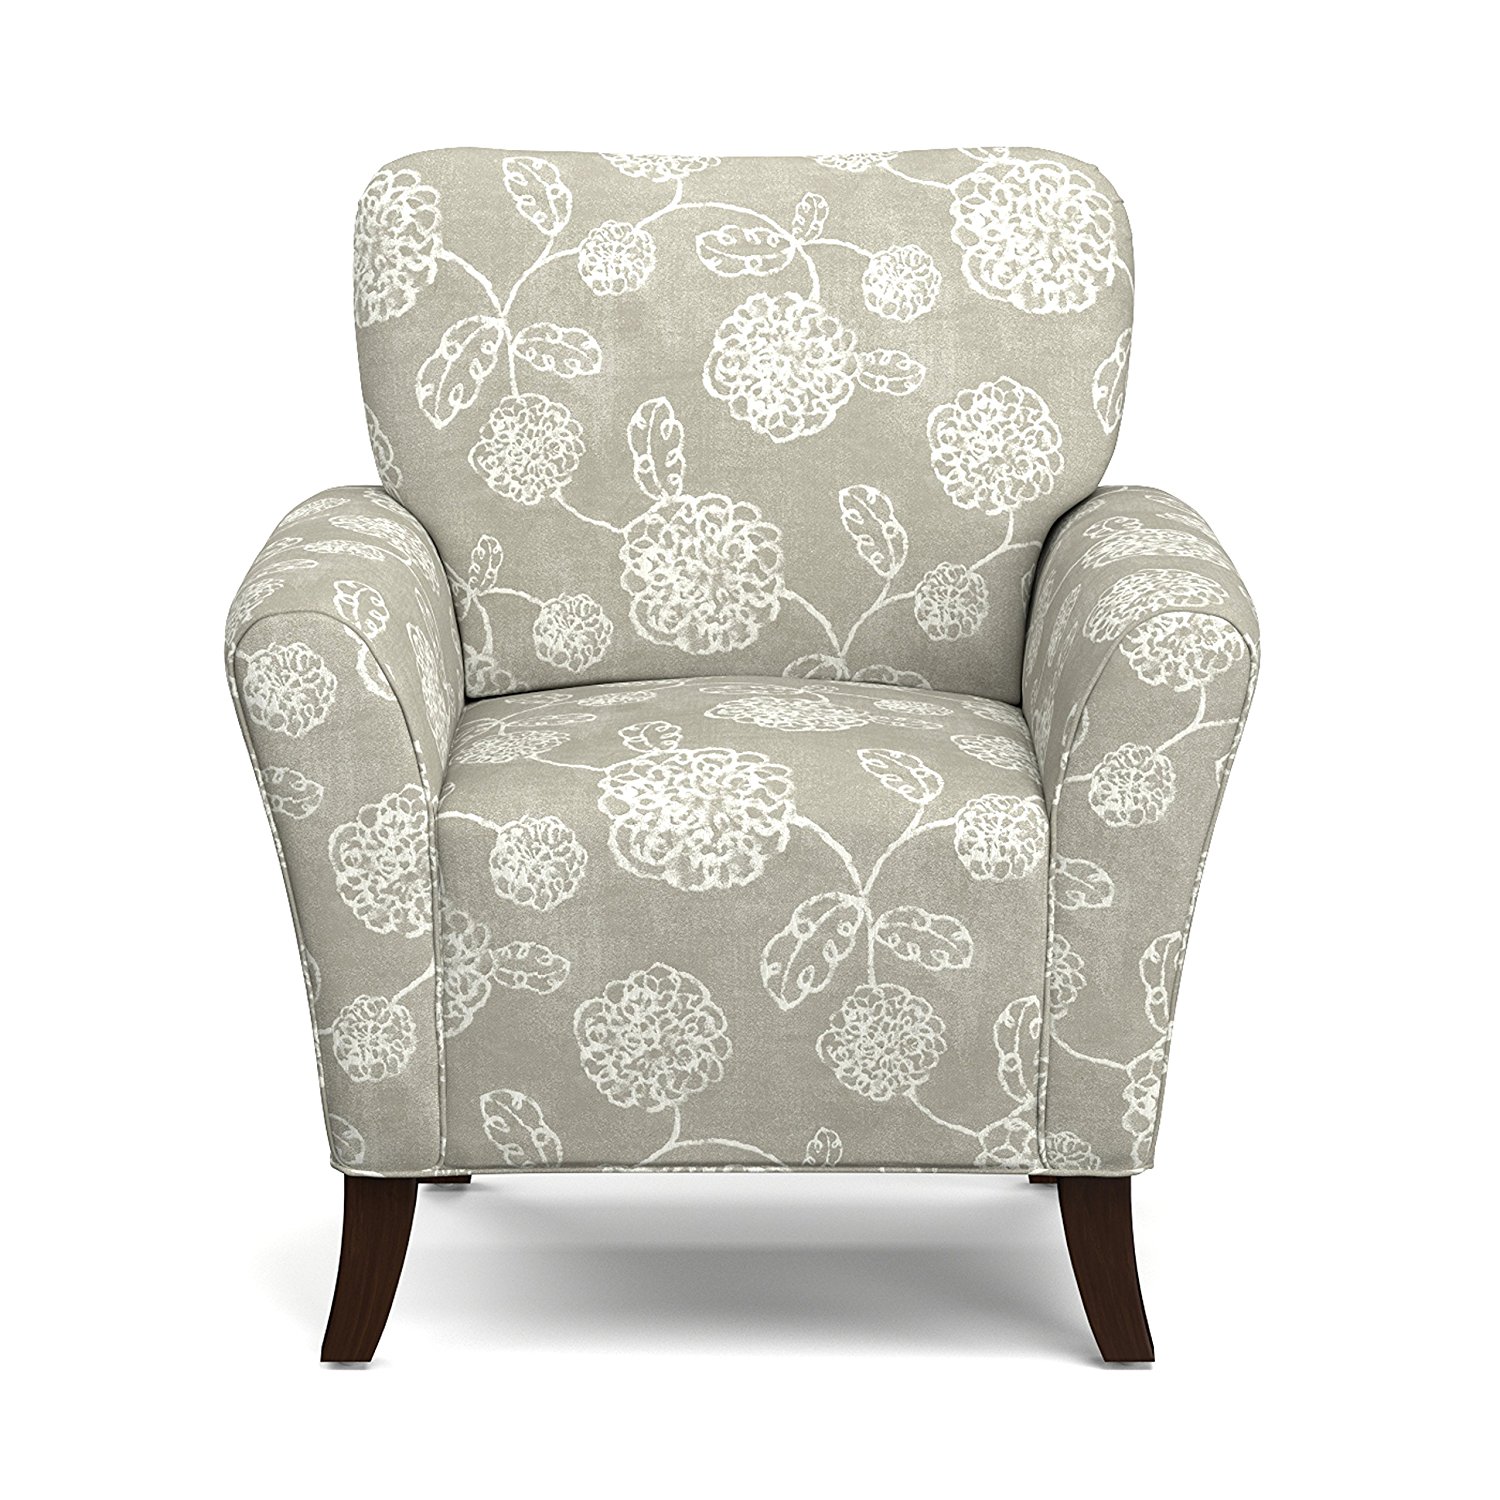 Upholstered Living Room Chairs - Decor IdeasDecor Ideas